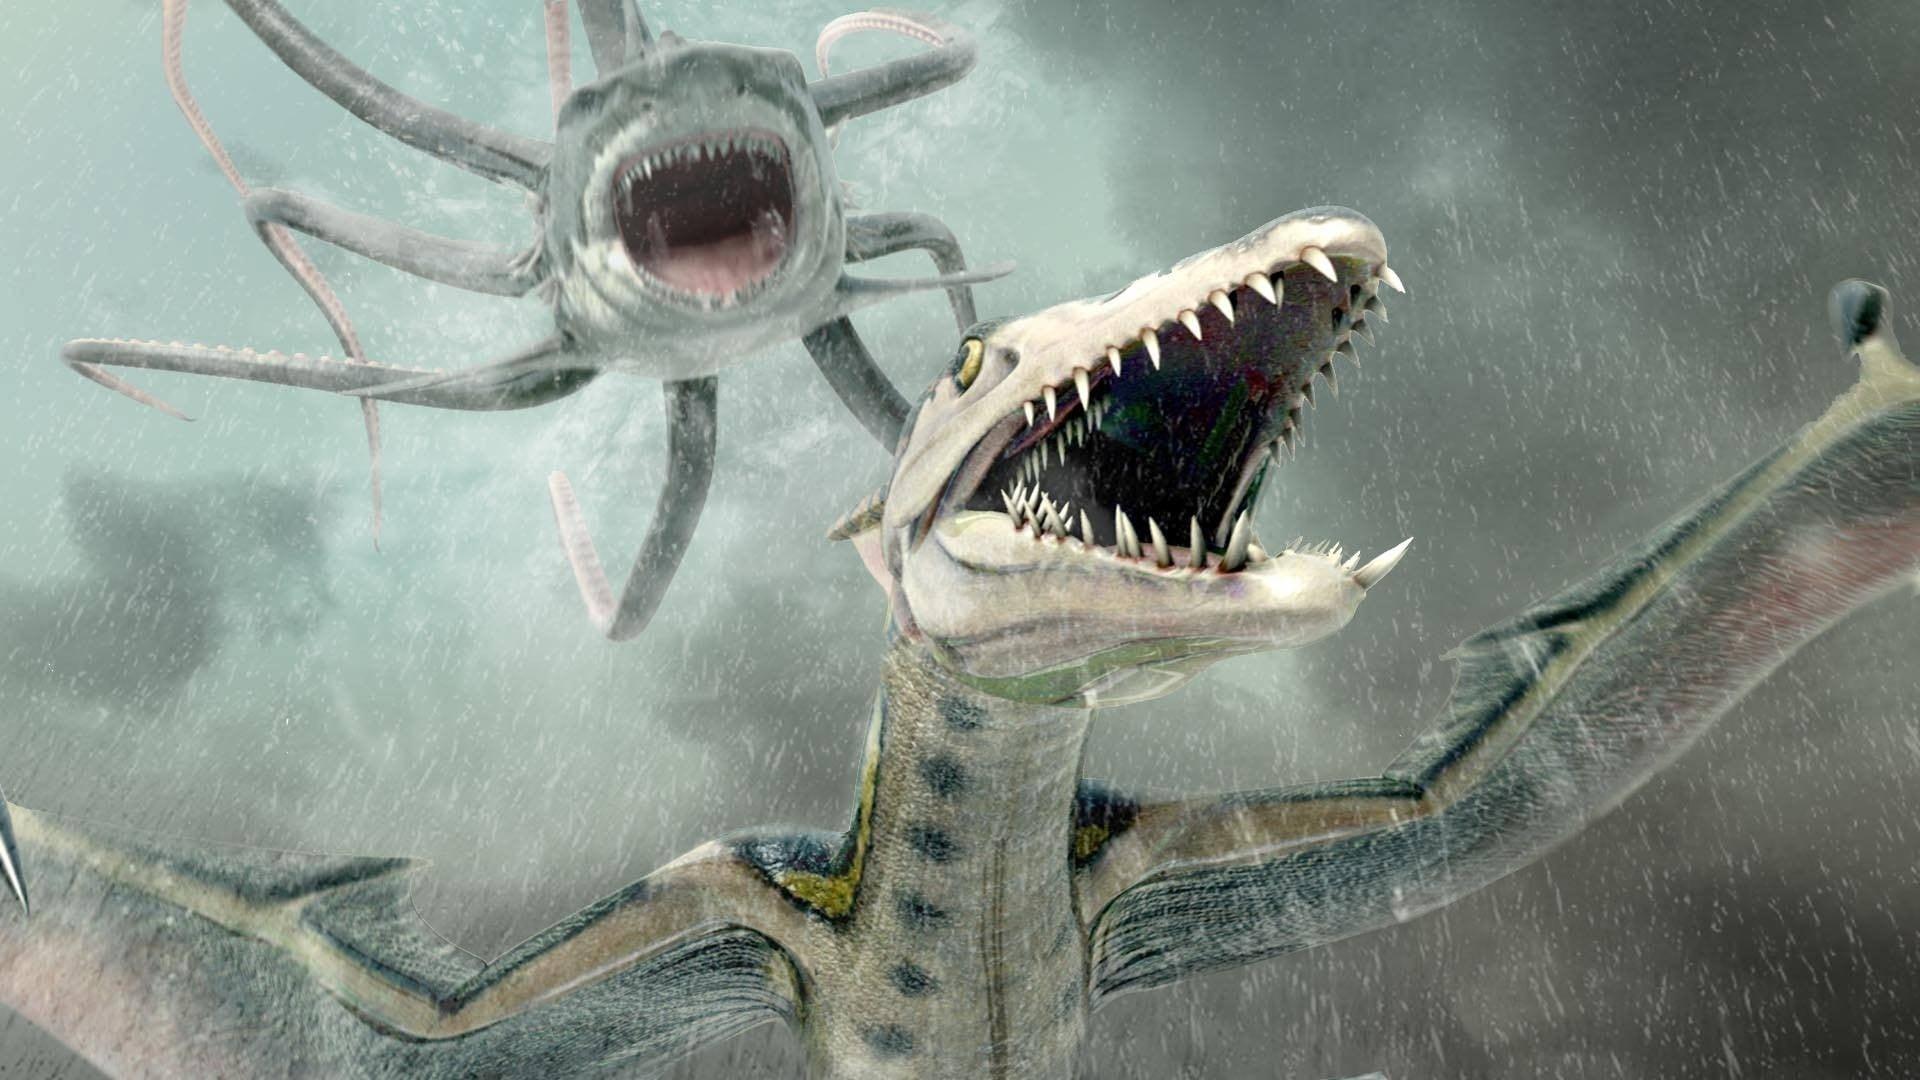 دانلود فیلم Sharktopus vs. Pteracuda 2014